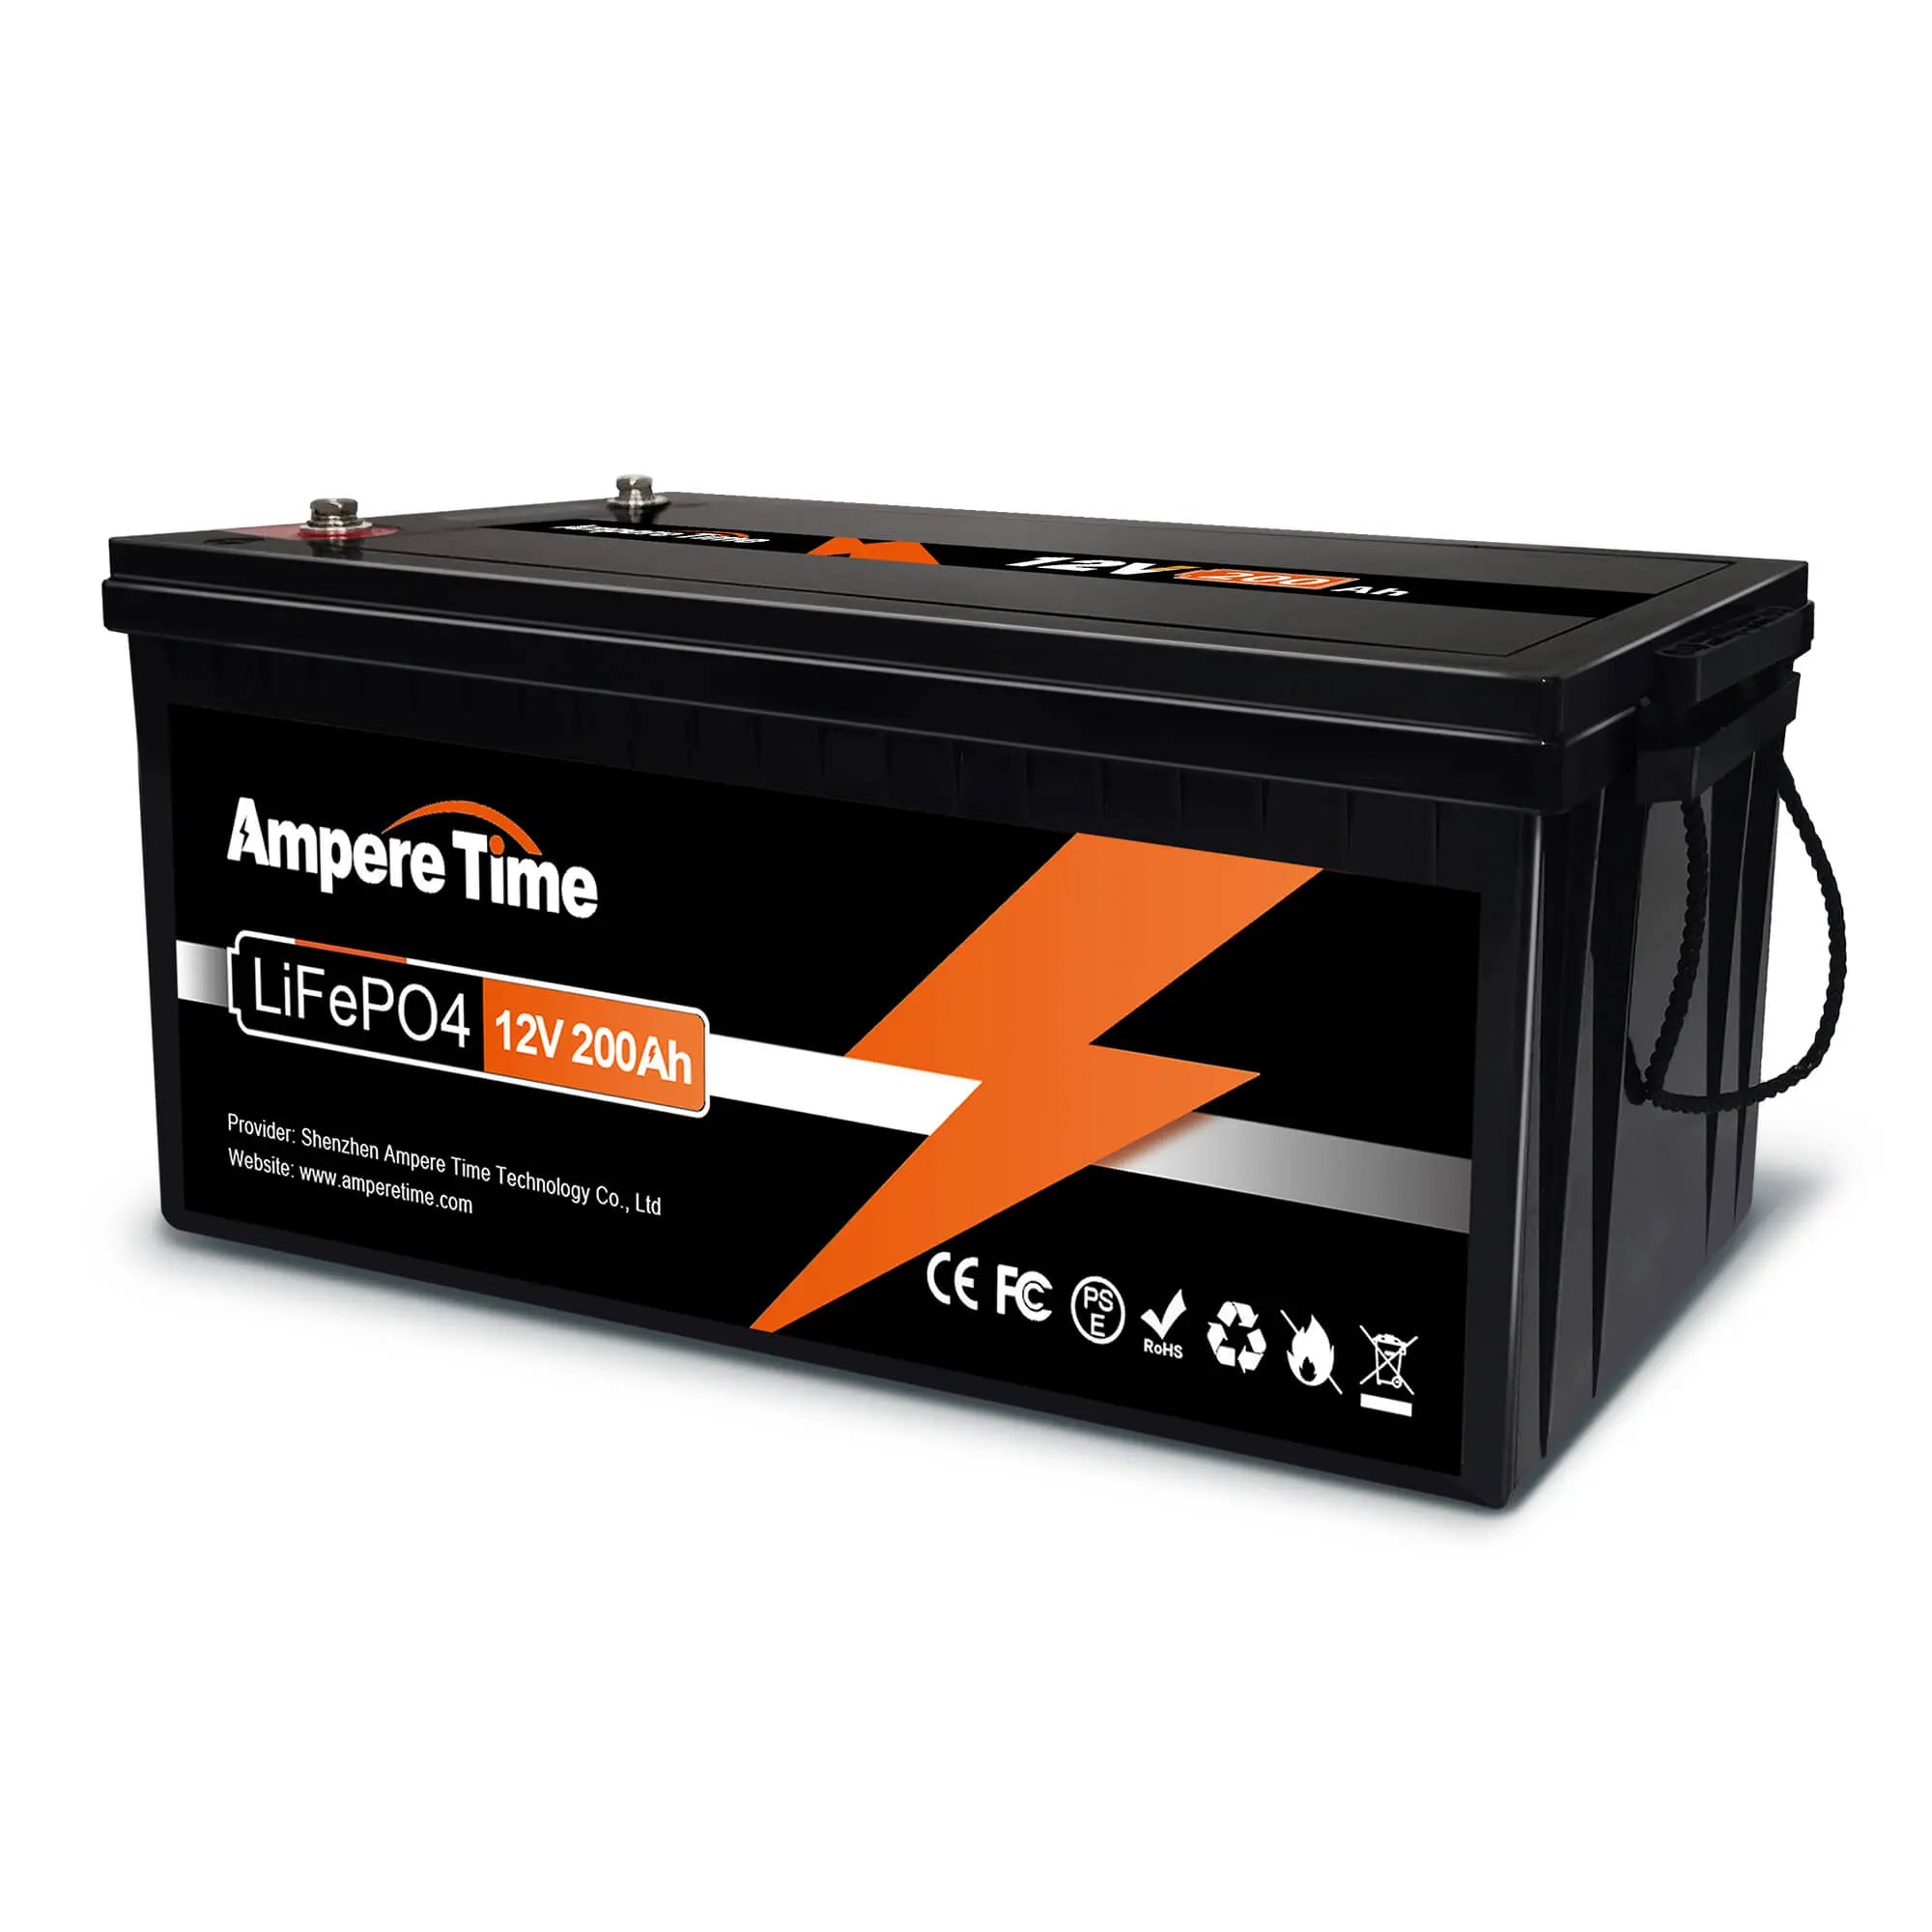 Ampere Time 12V 200Ah(2560Wh) Lithium Battery, Perfect Solar Batteries Amperetime-US